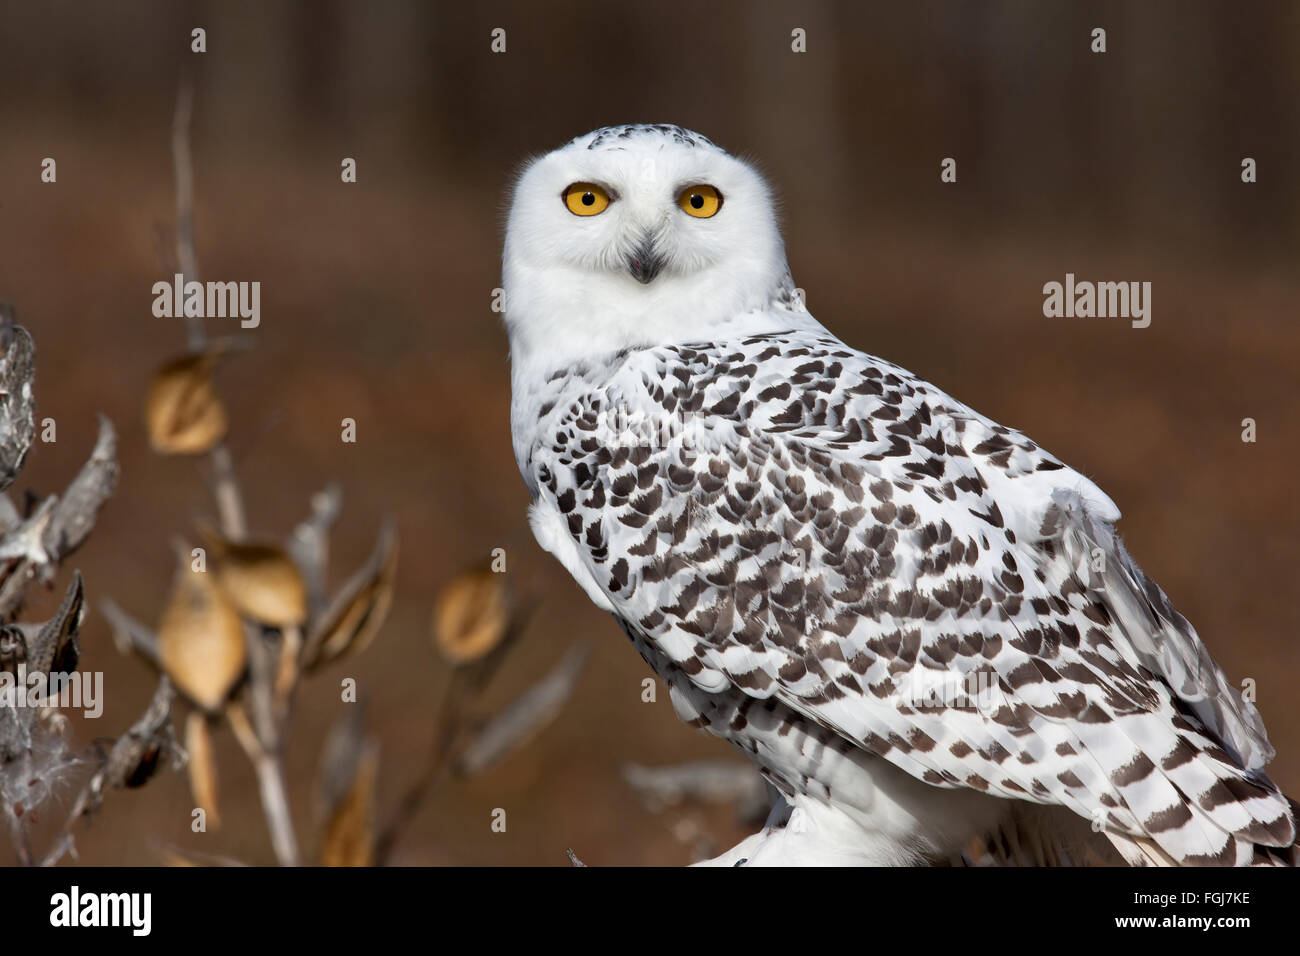 Snowy Owl in Autumn. Autumn foliage creates a wonderful backdrop for this beautiful Snowy Owl Stock Photo